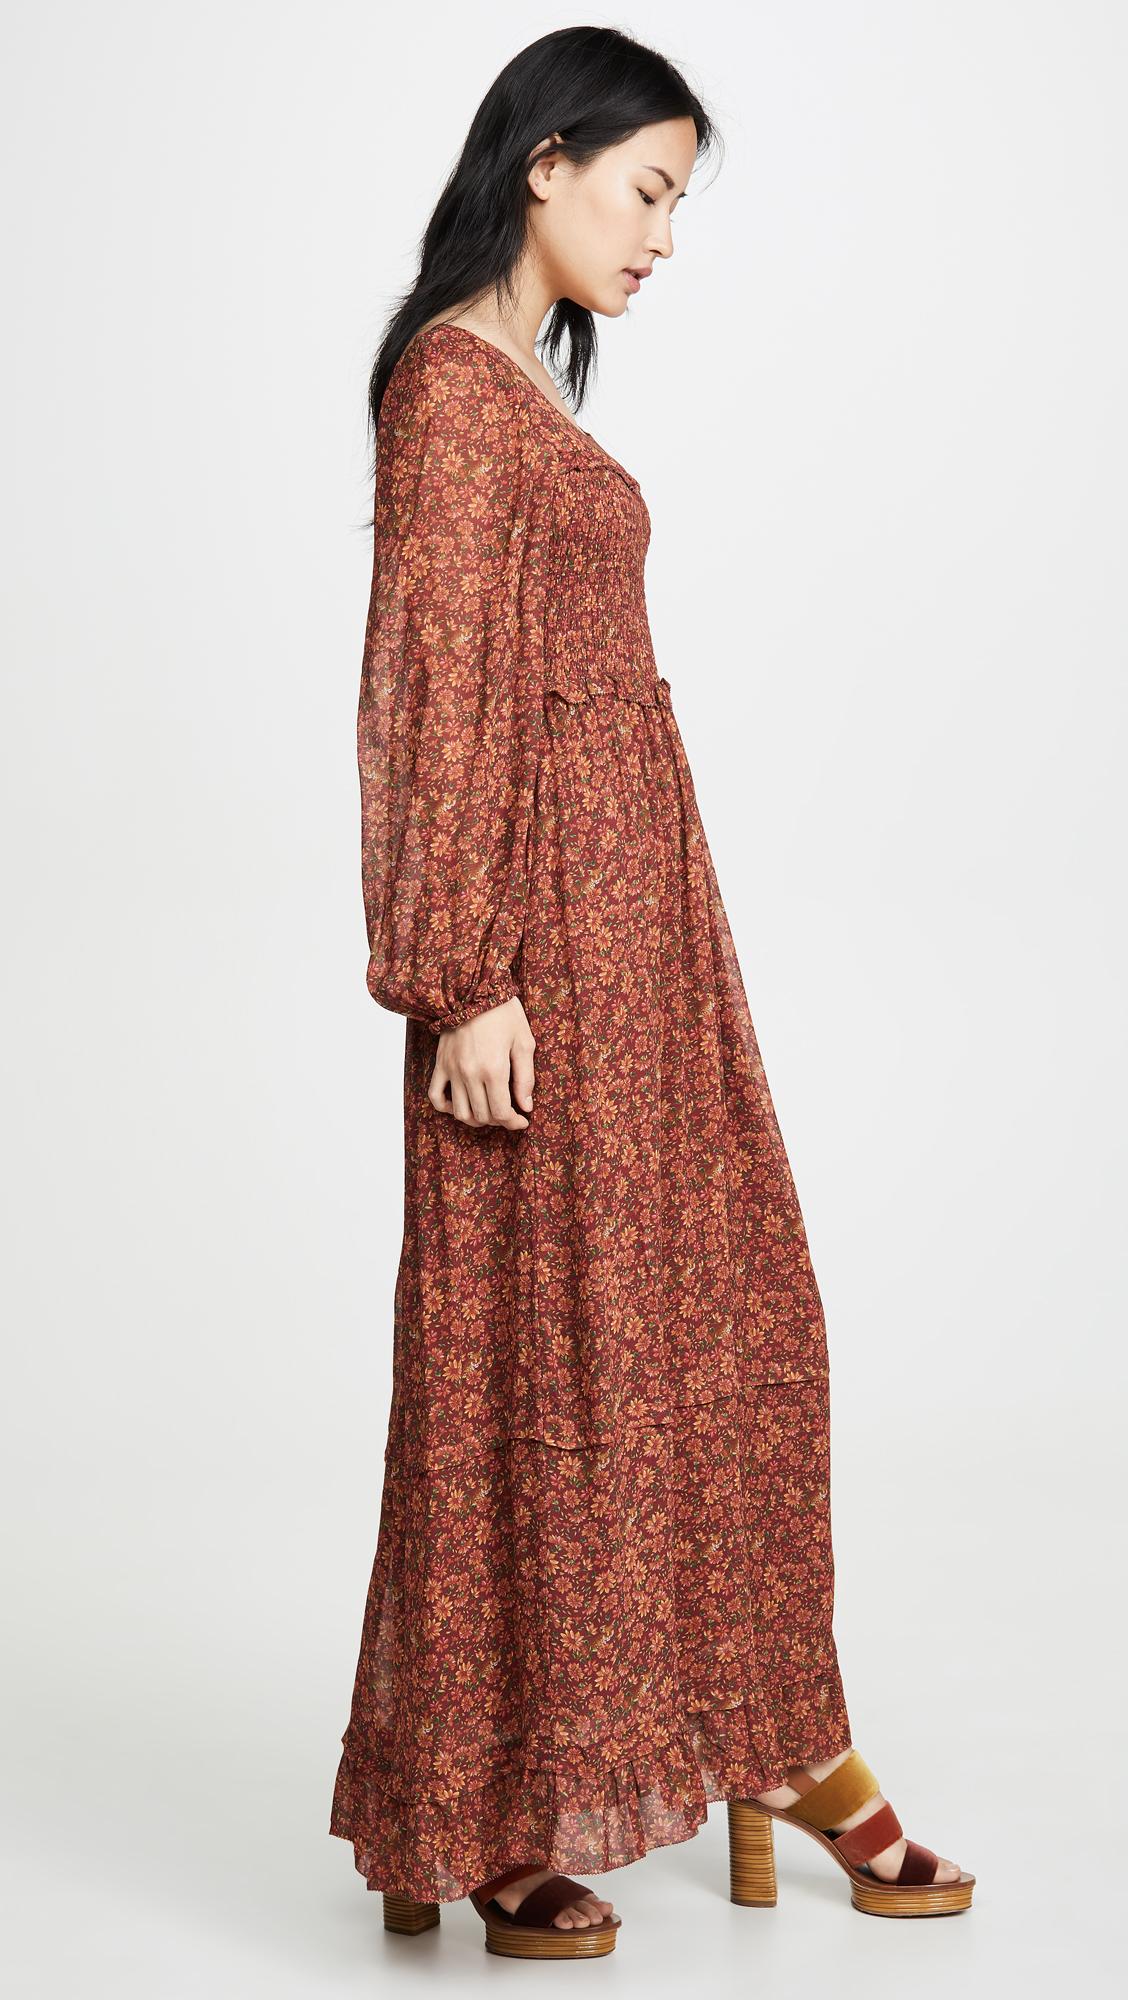 FARM Rio Synthetic Leopard Garden Maxi Dress in Brown - Lyst